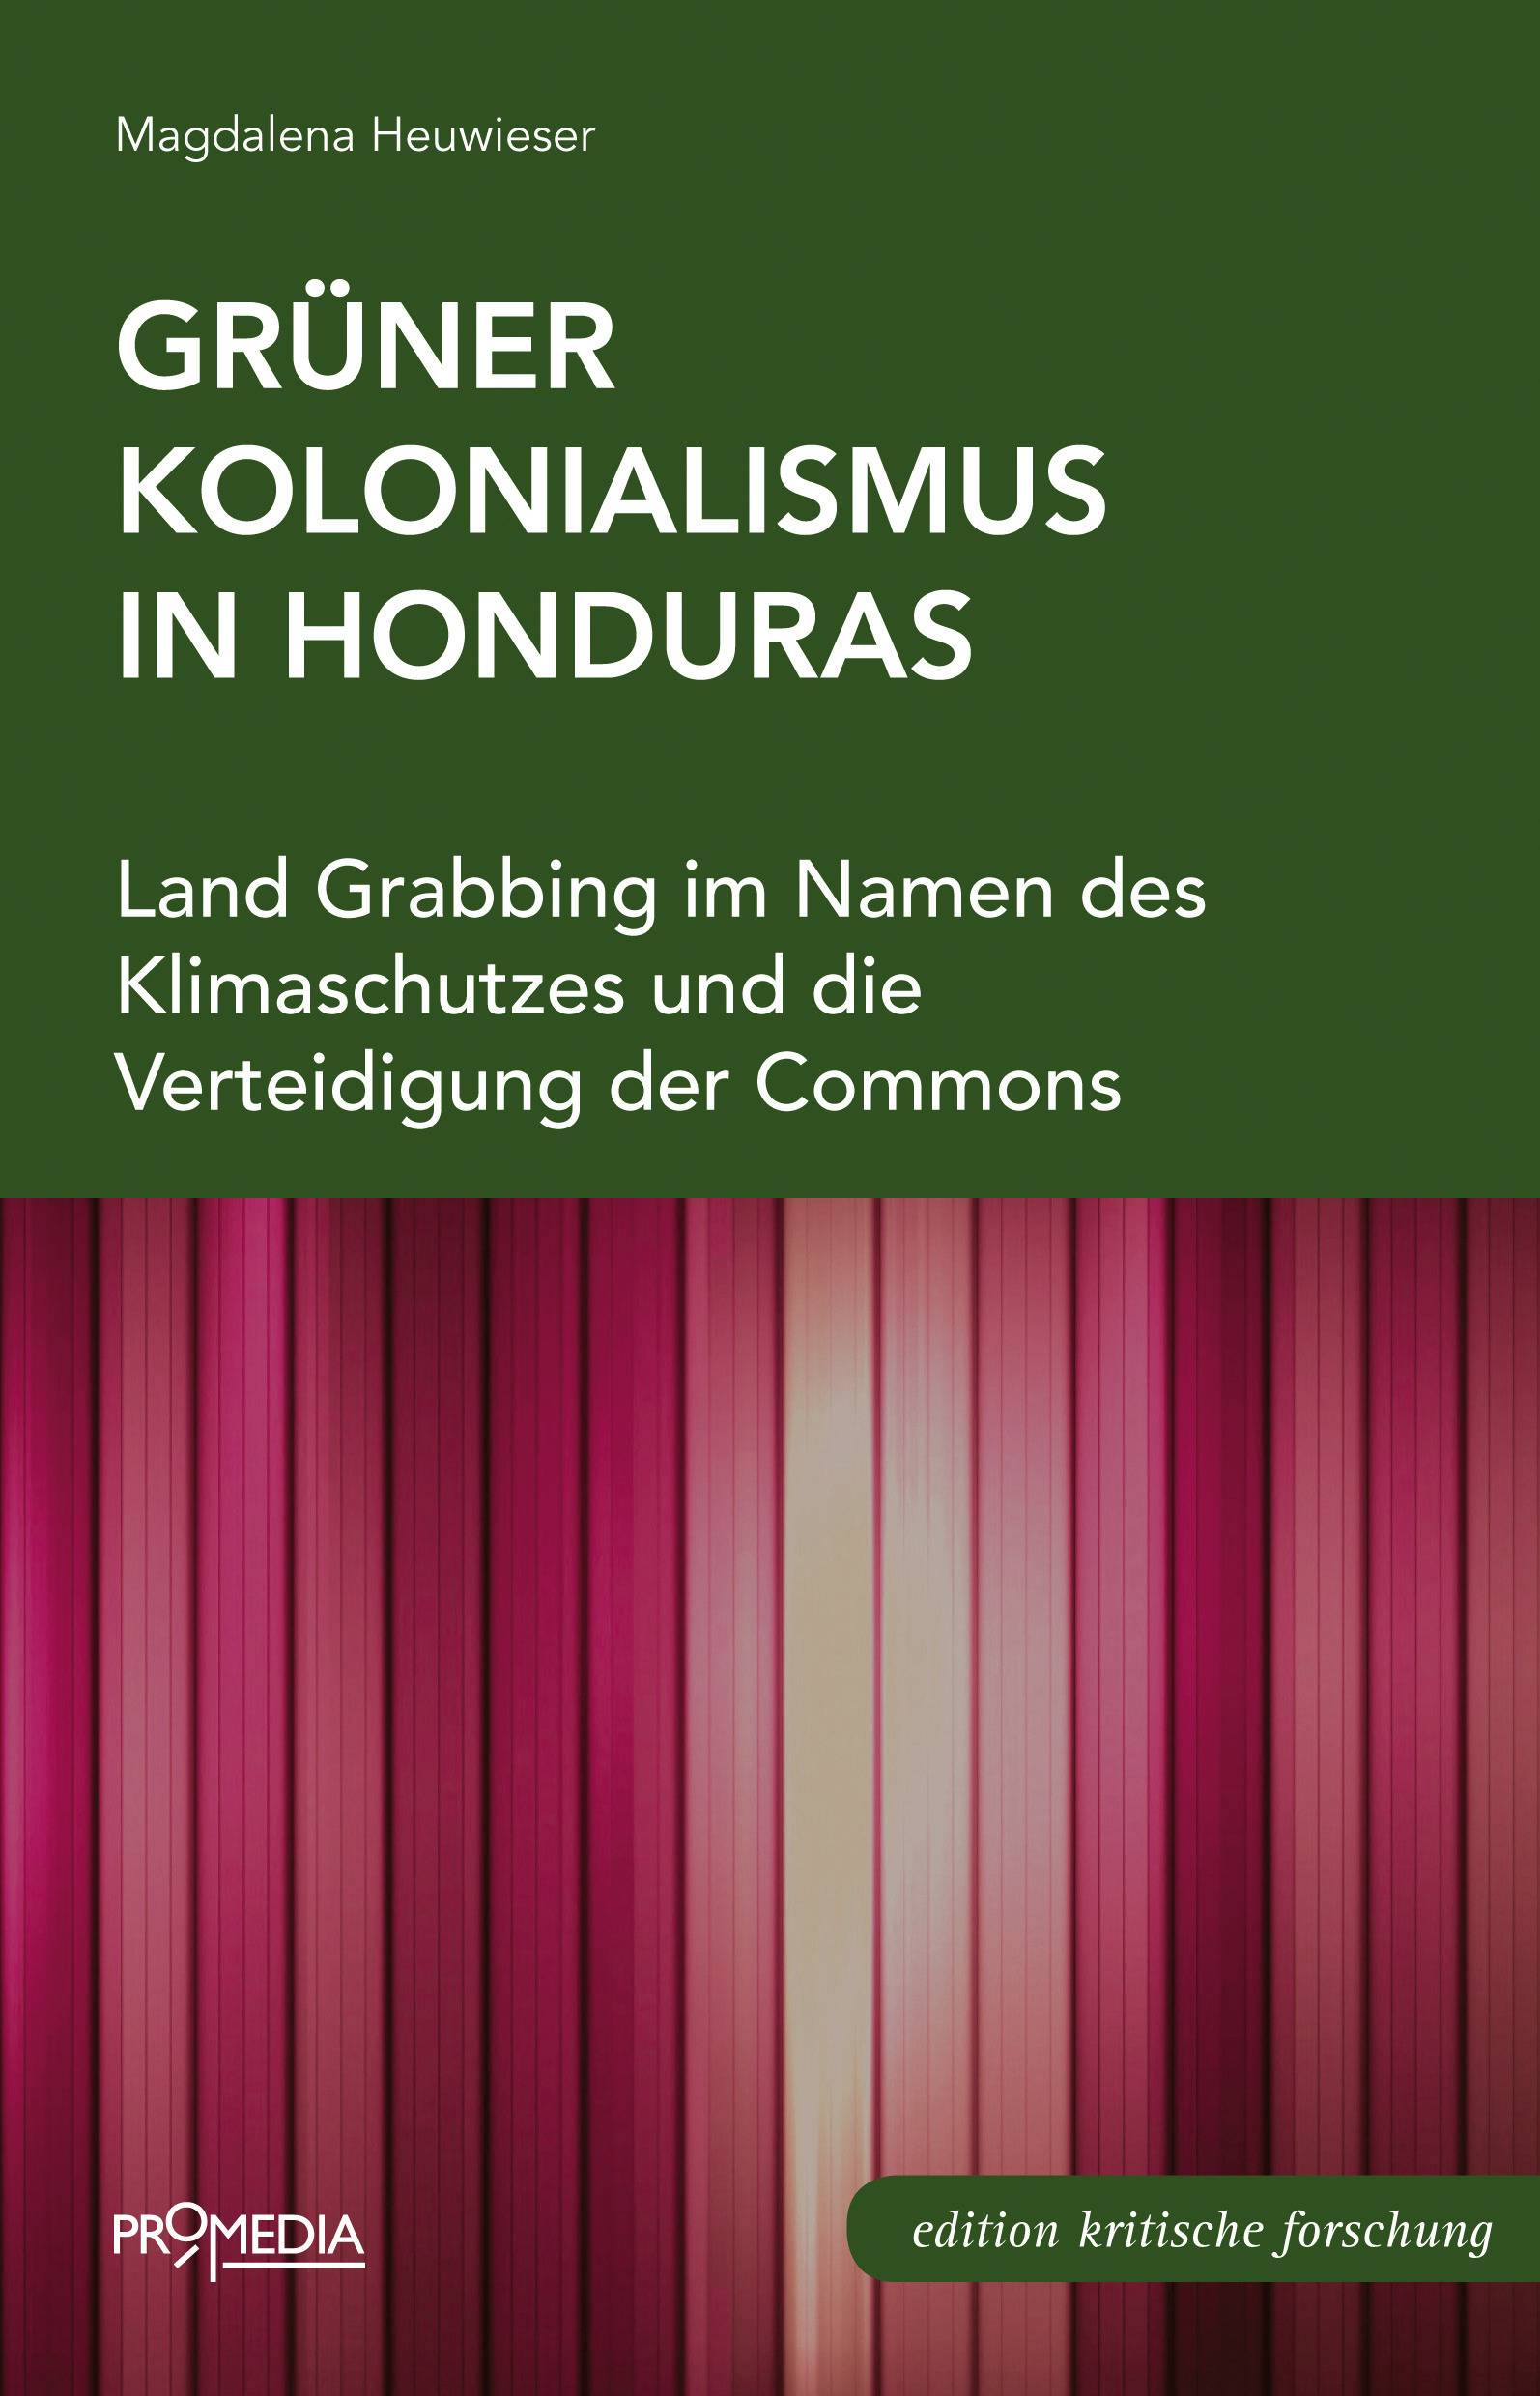 [Cover] Grüner Kolonialismus in Honduras